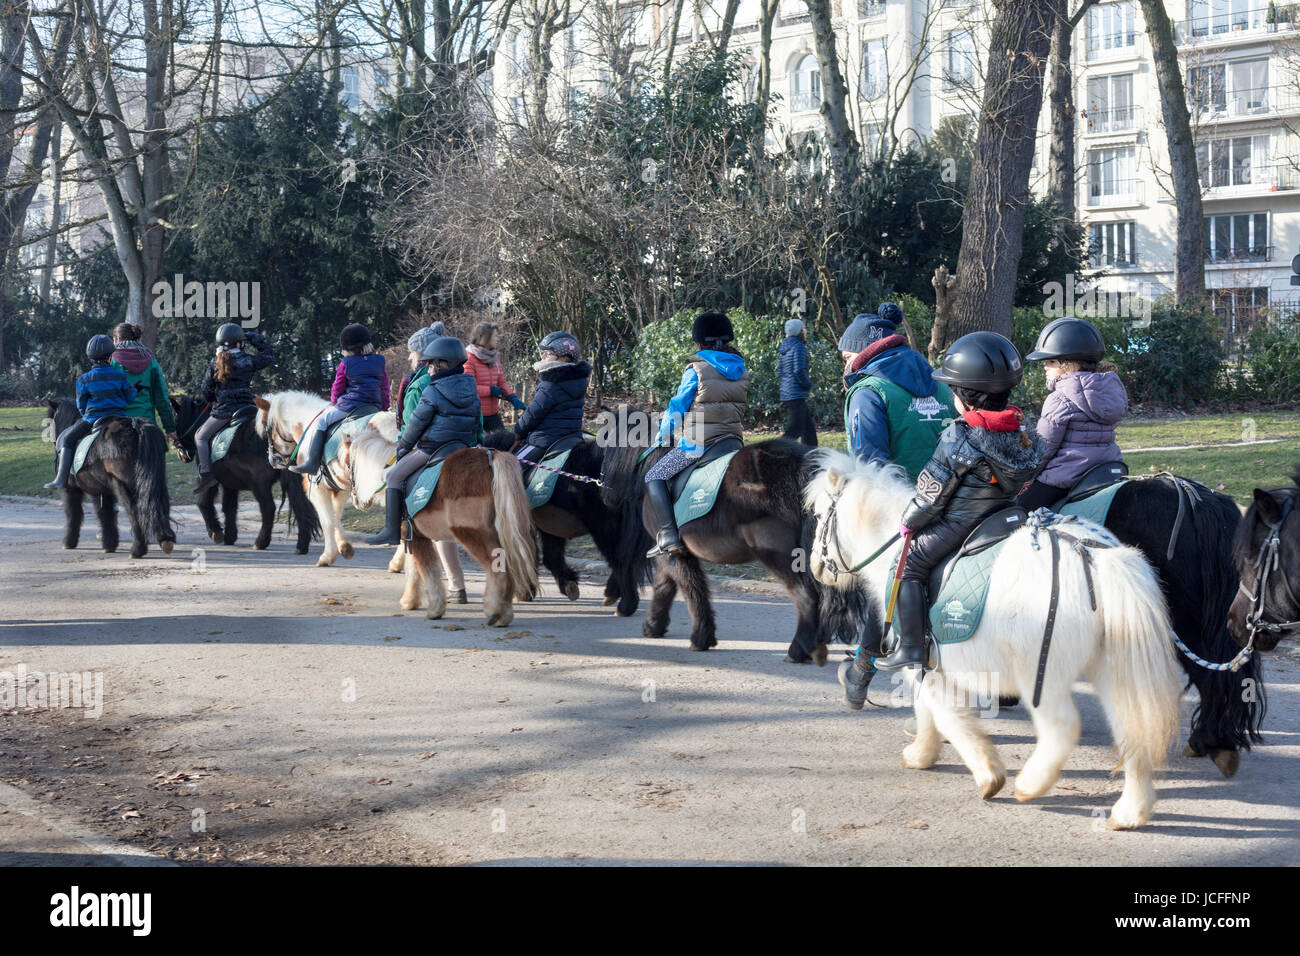 Kinder auf Shetland-Ponys vom Ponyclub, Jardin d ' Acclimatation, Bois de Boulogne, Paris, Frankreich Stockfoto